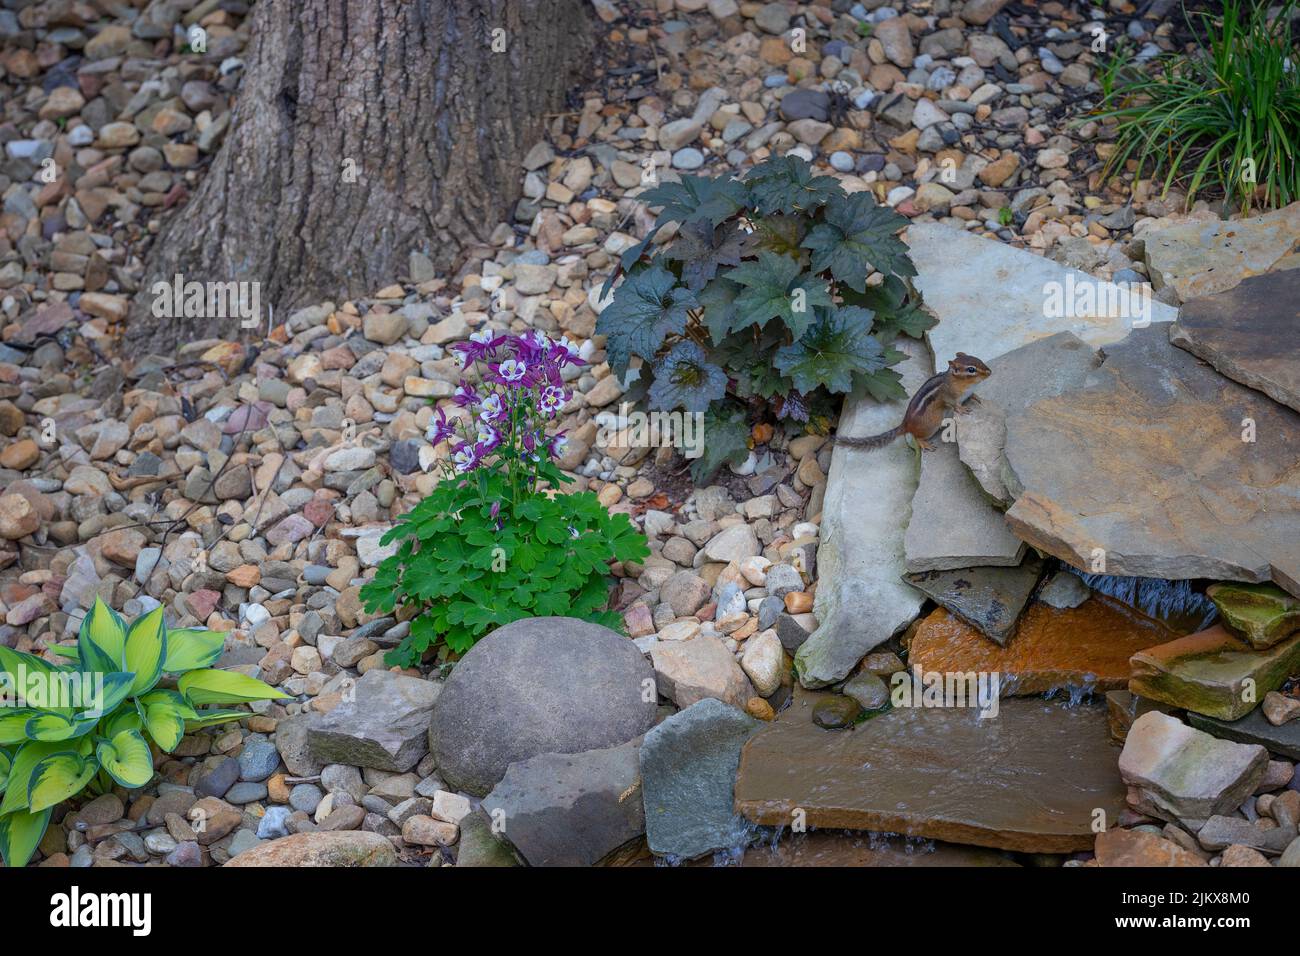 Chipmunk climbs up rocks of a backyard water feature. Stock Photo